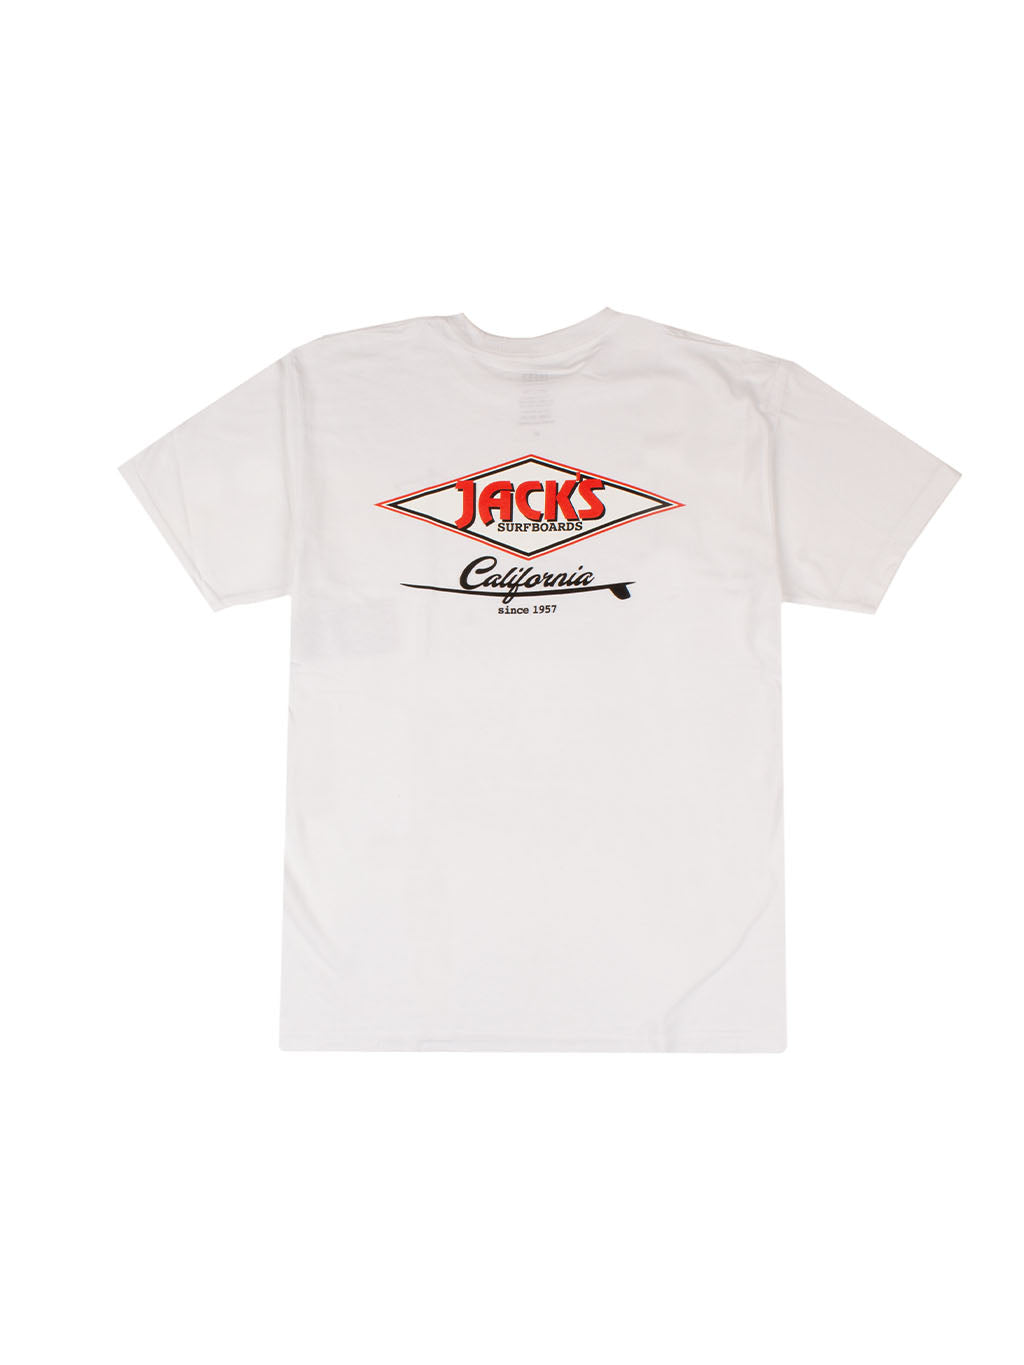 New Shirt Interscope Records Logo Black Size S-3XL Unisex T-Shirt